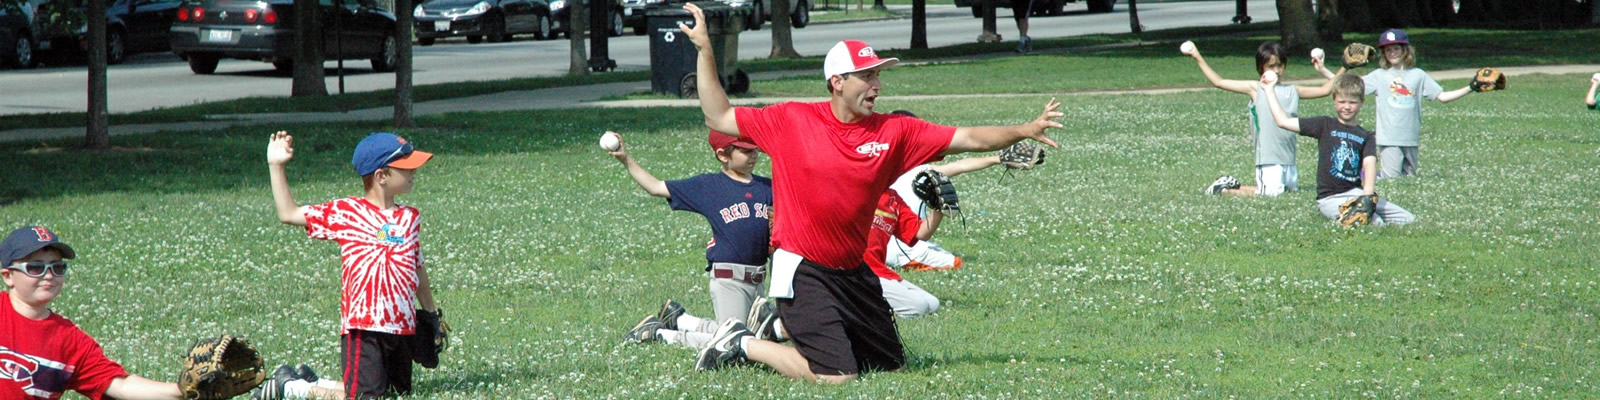 Teams « Chicago Youth Baseball Training & Instruction